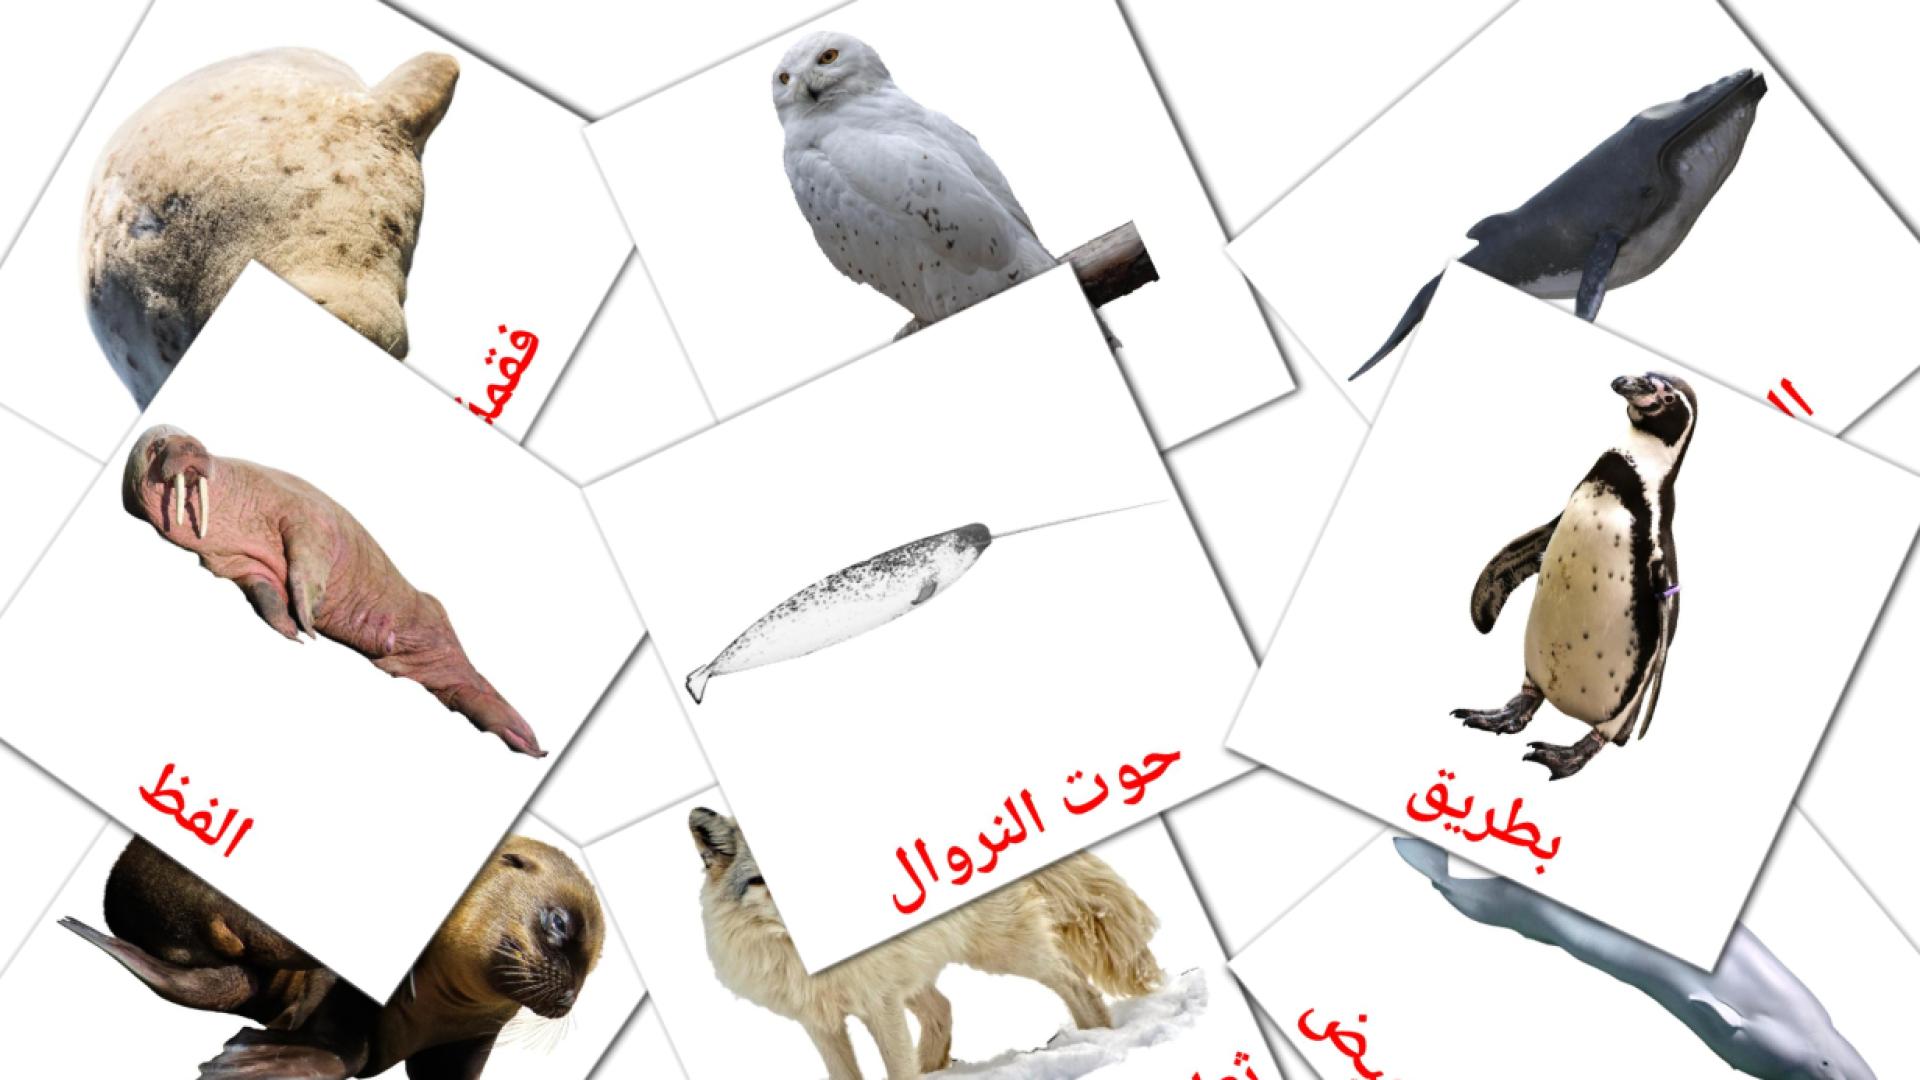 Tiere in der arktis - Arabisch Vokabelkarten